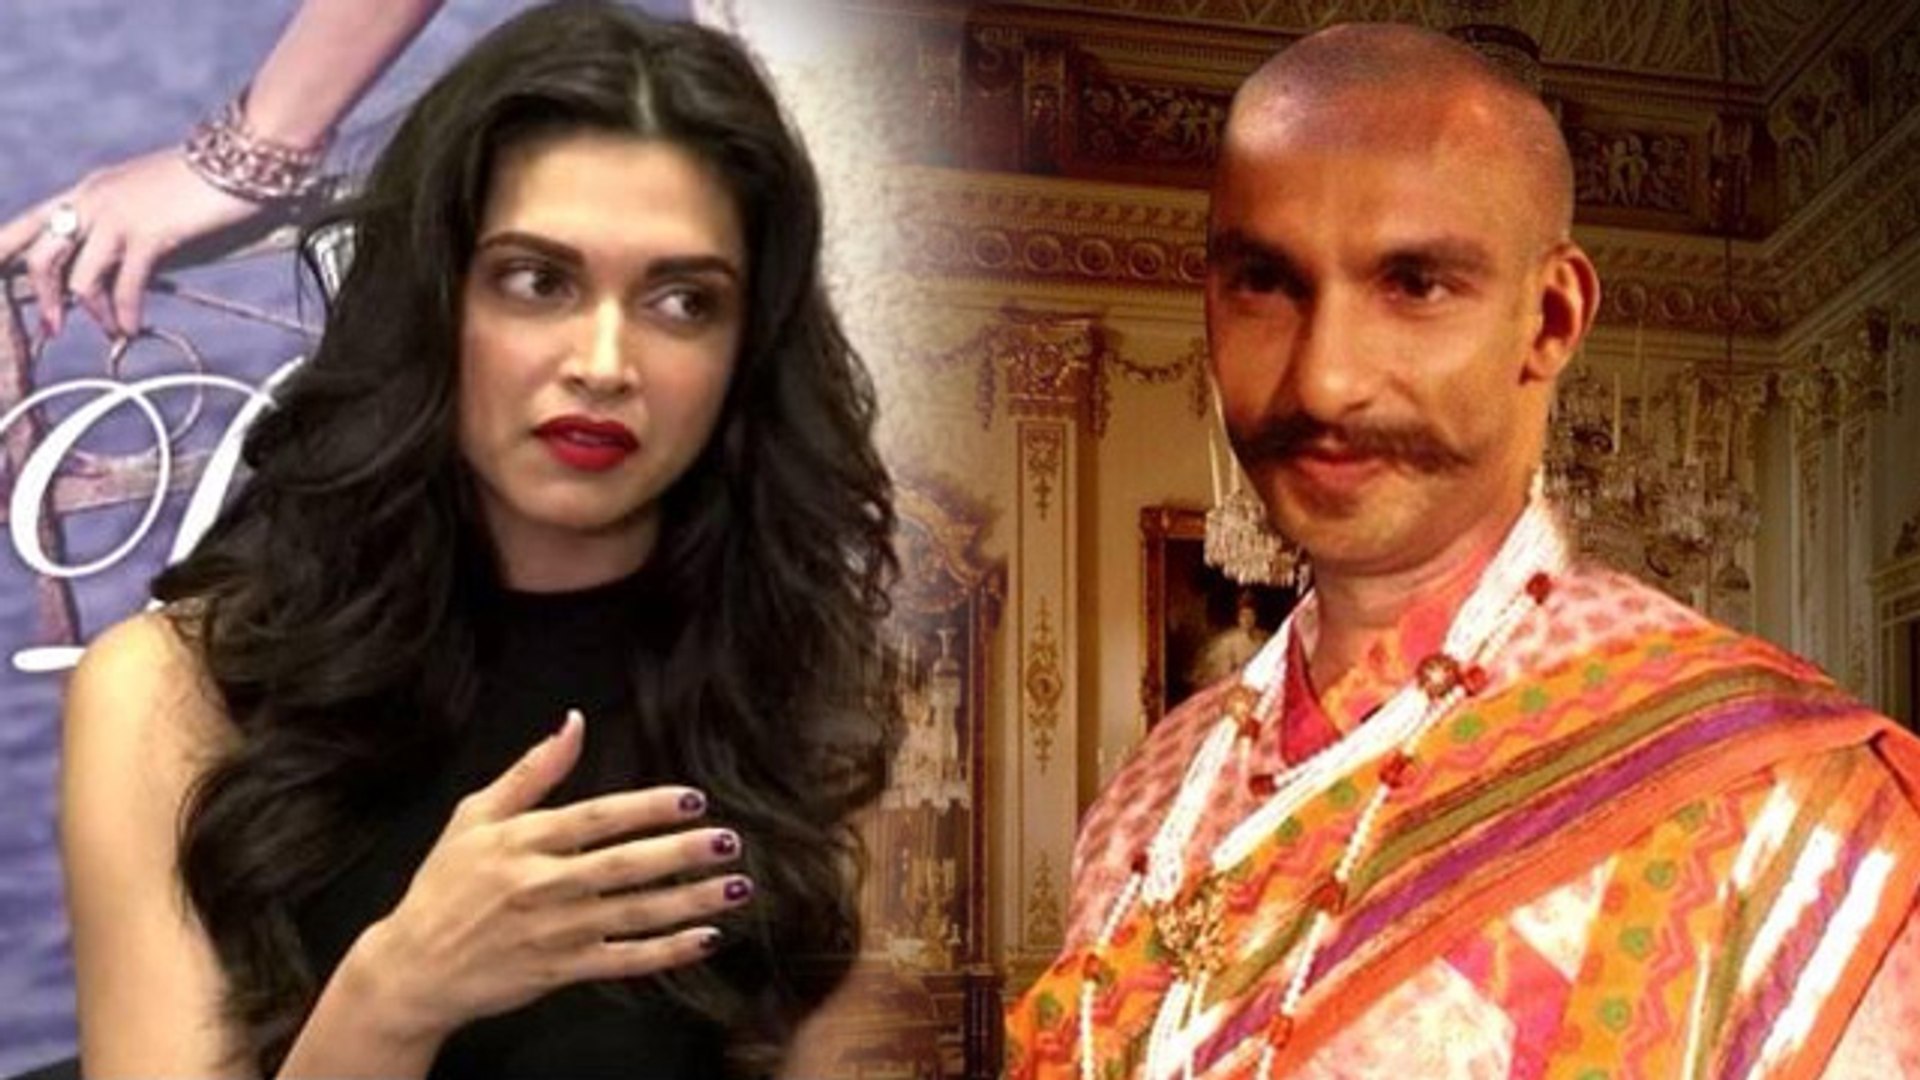 Deepika Padukone's rating Ranveer Singh on his clean-shaven looks in THIS  throwback video is simply unmissable!